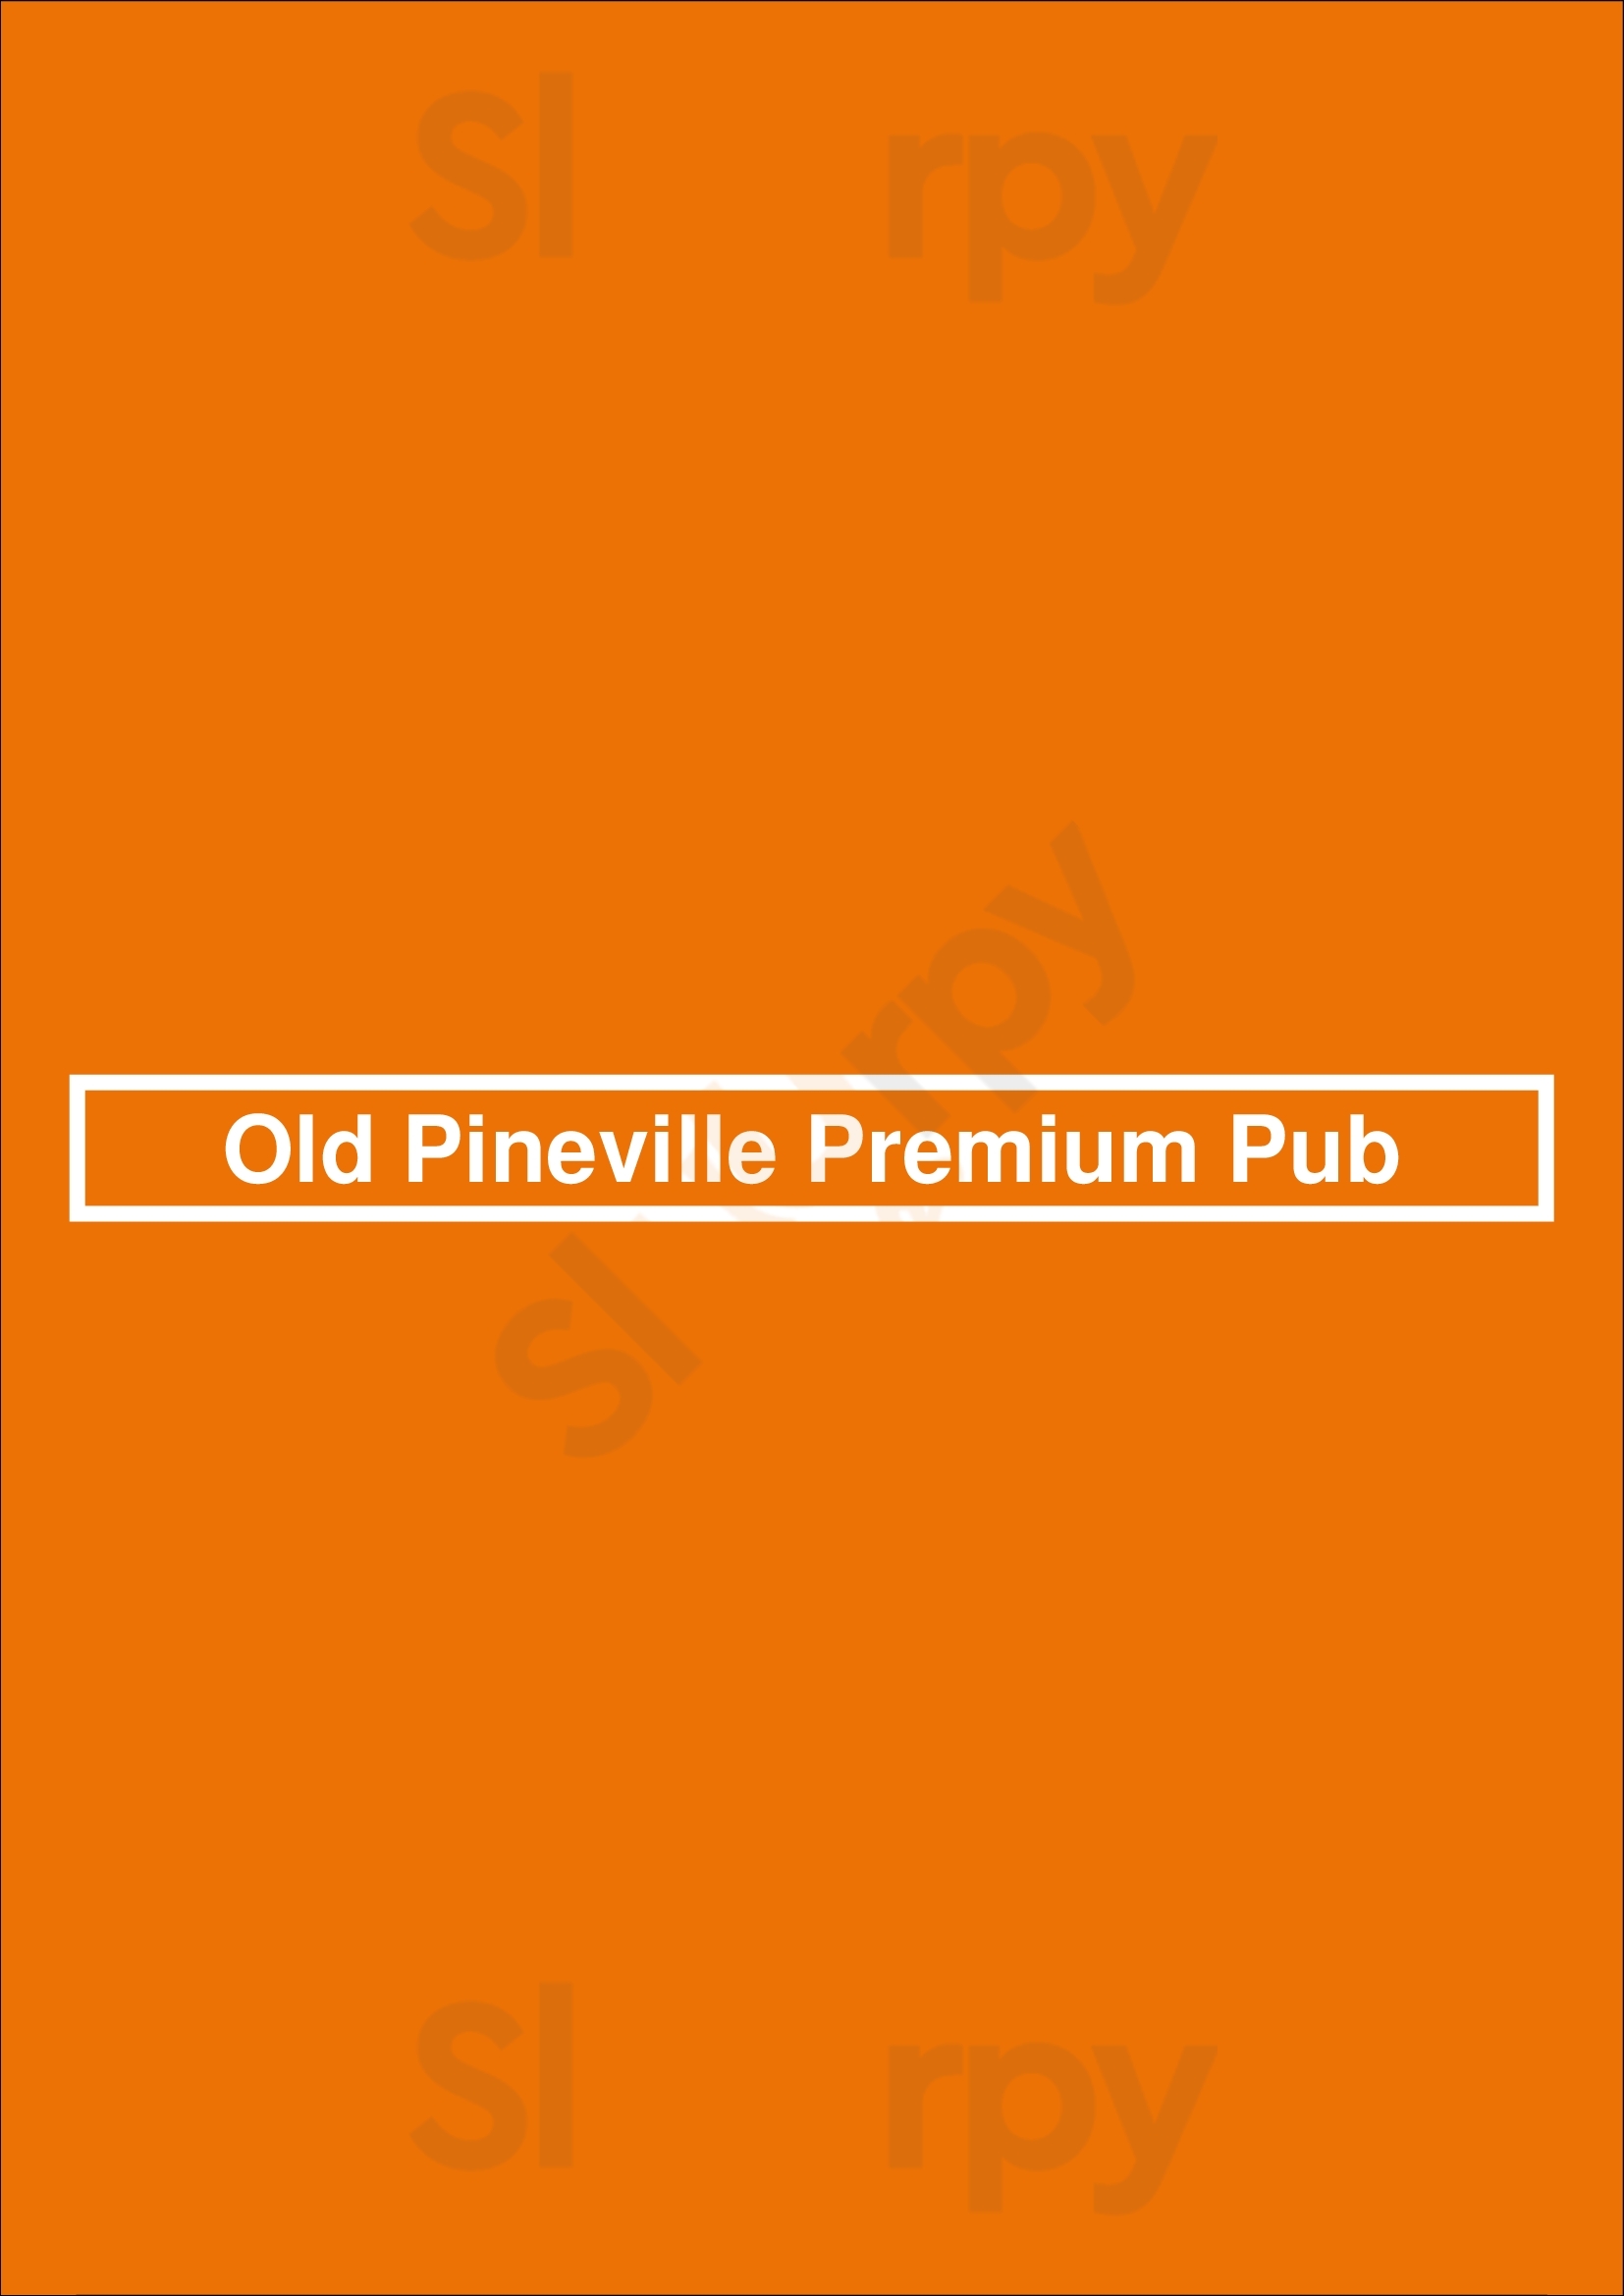 Old Pineville Premium Pub Charlotte Menu - 1